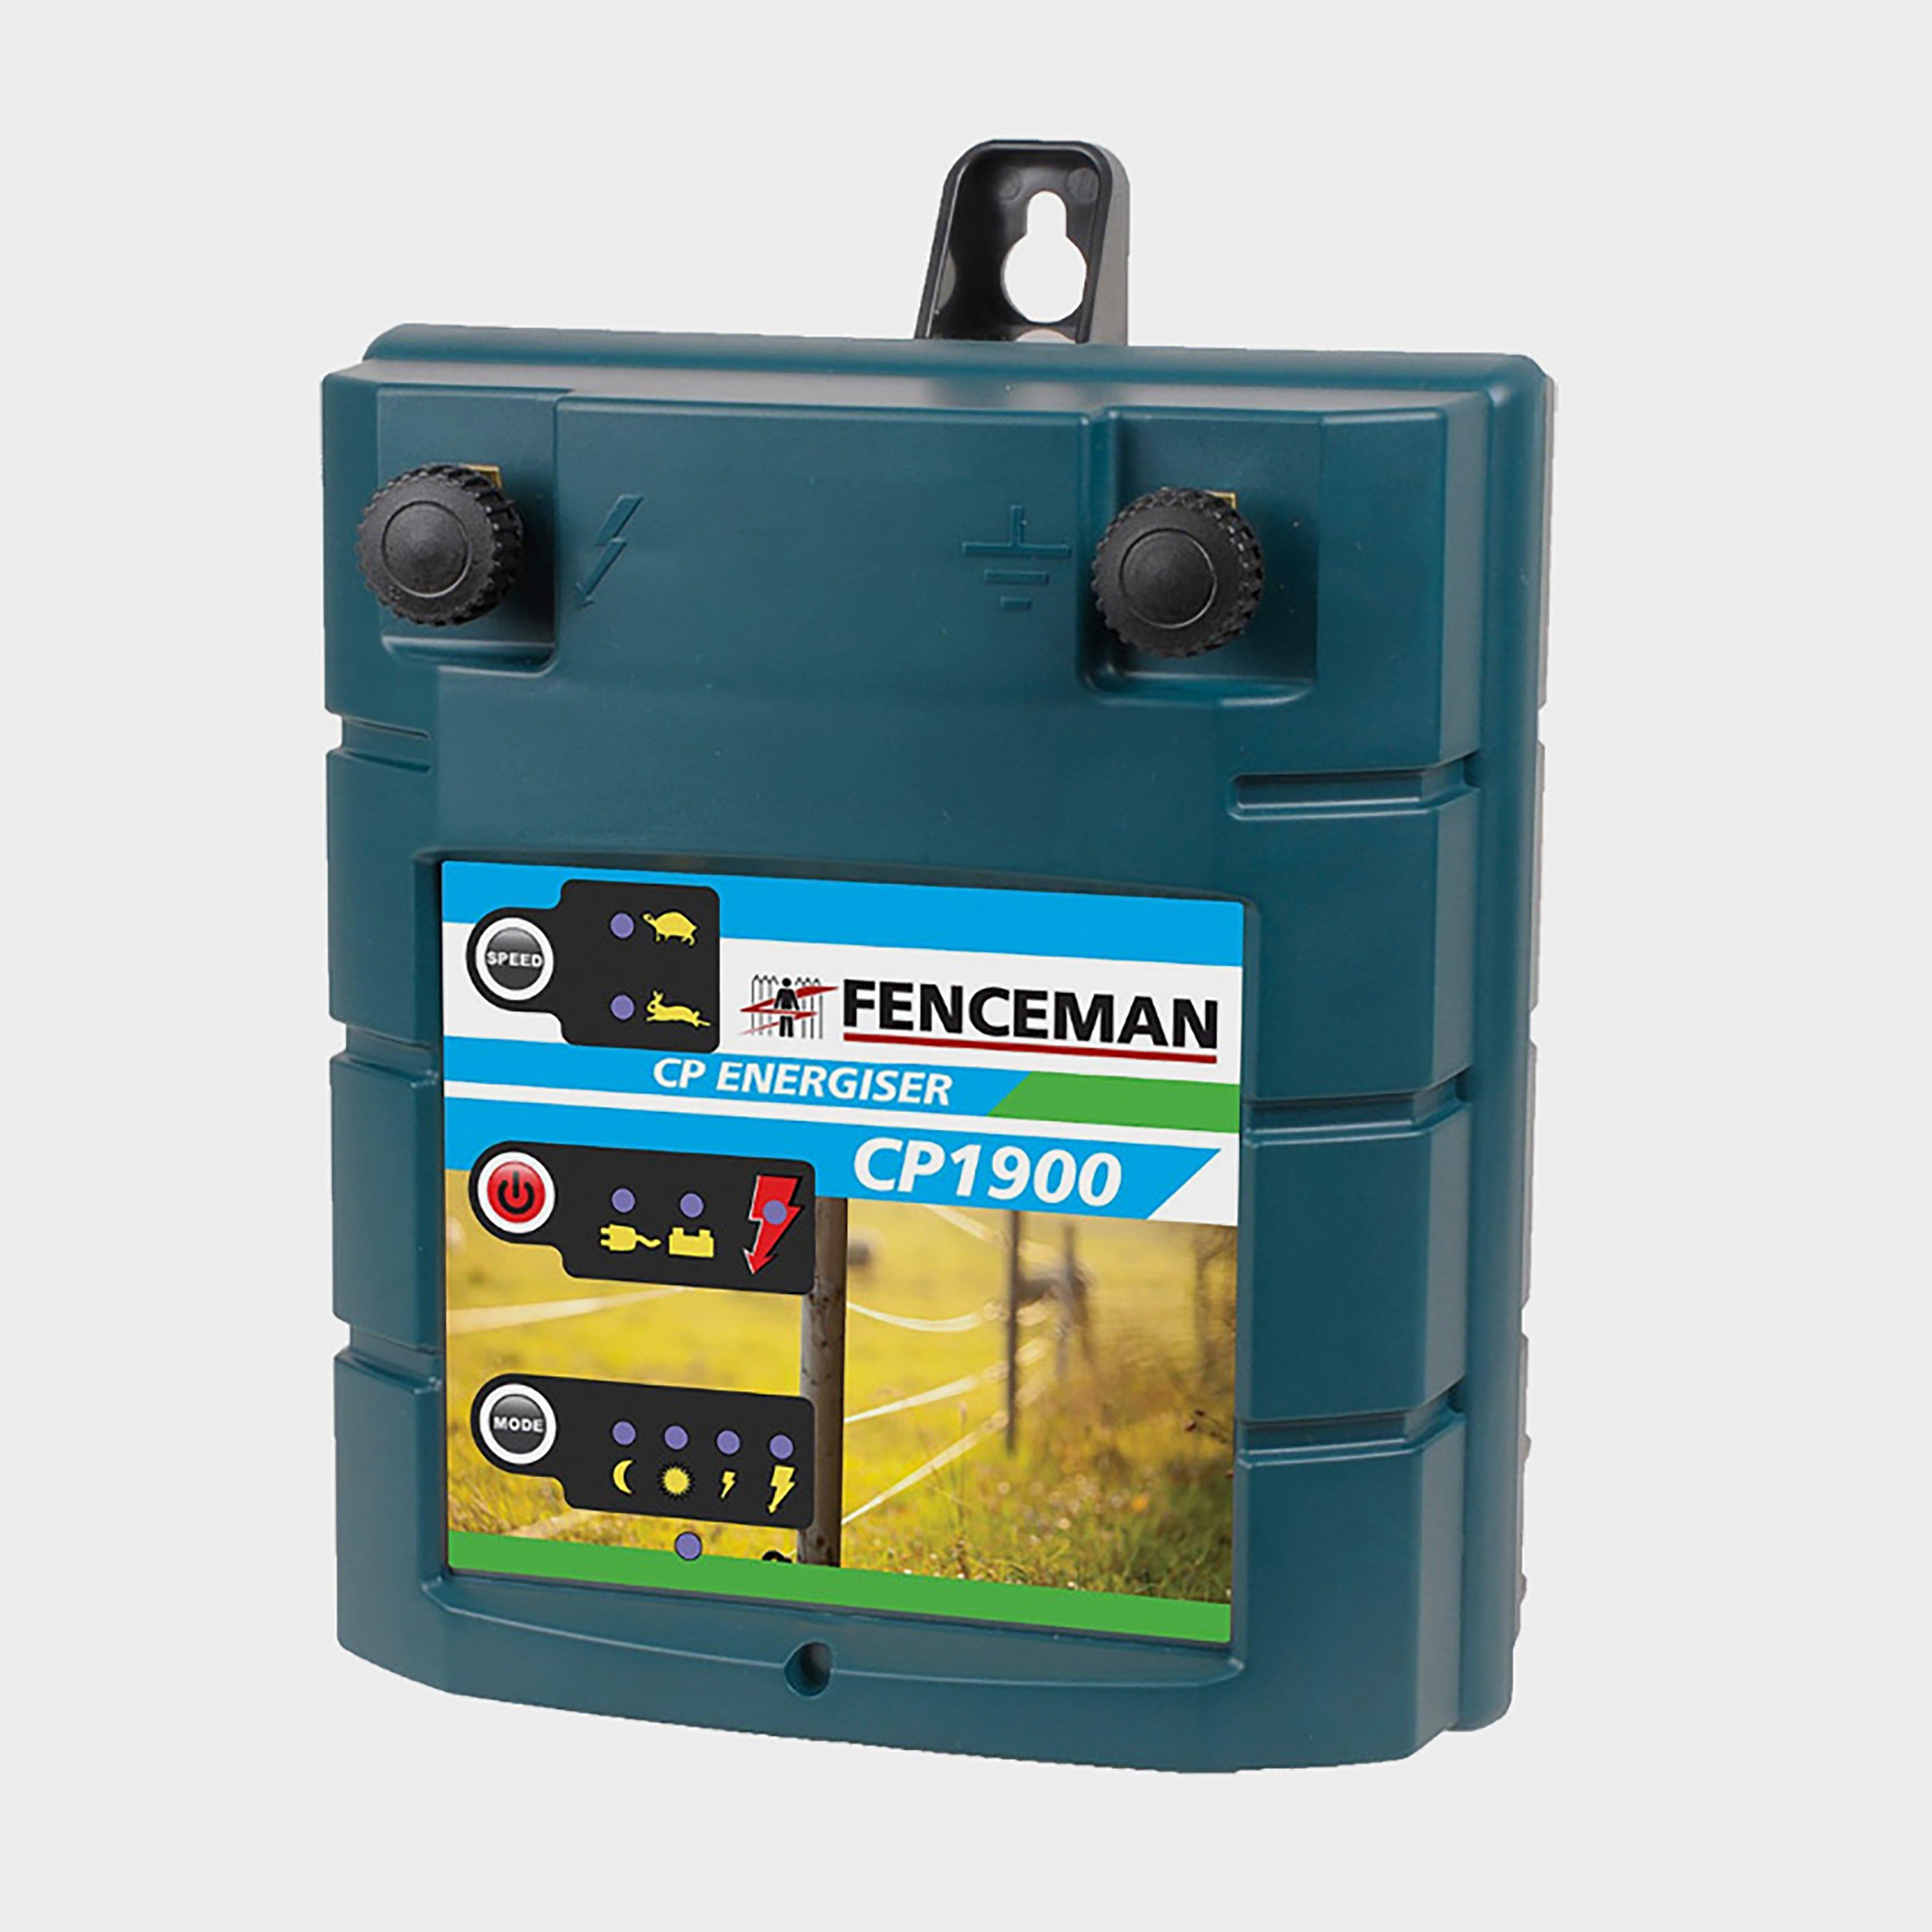  Fenceman Energiser CP1900, Blue